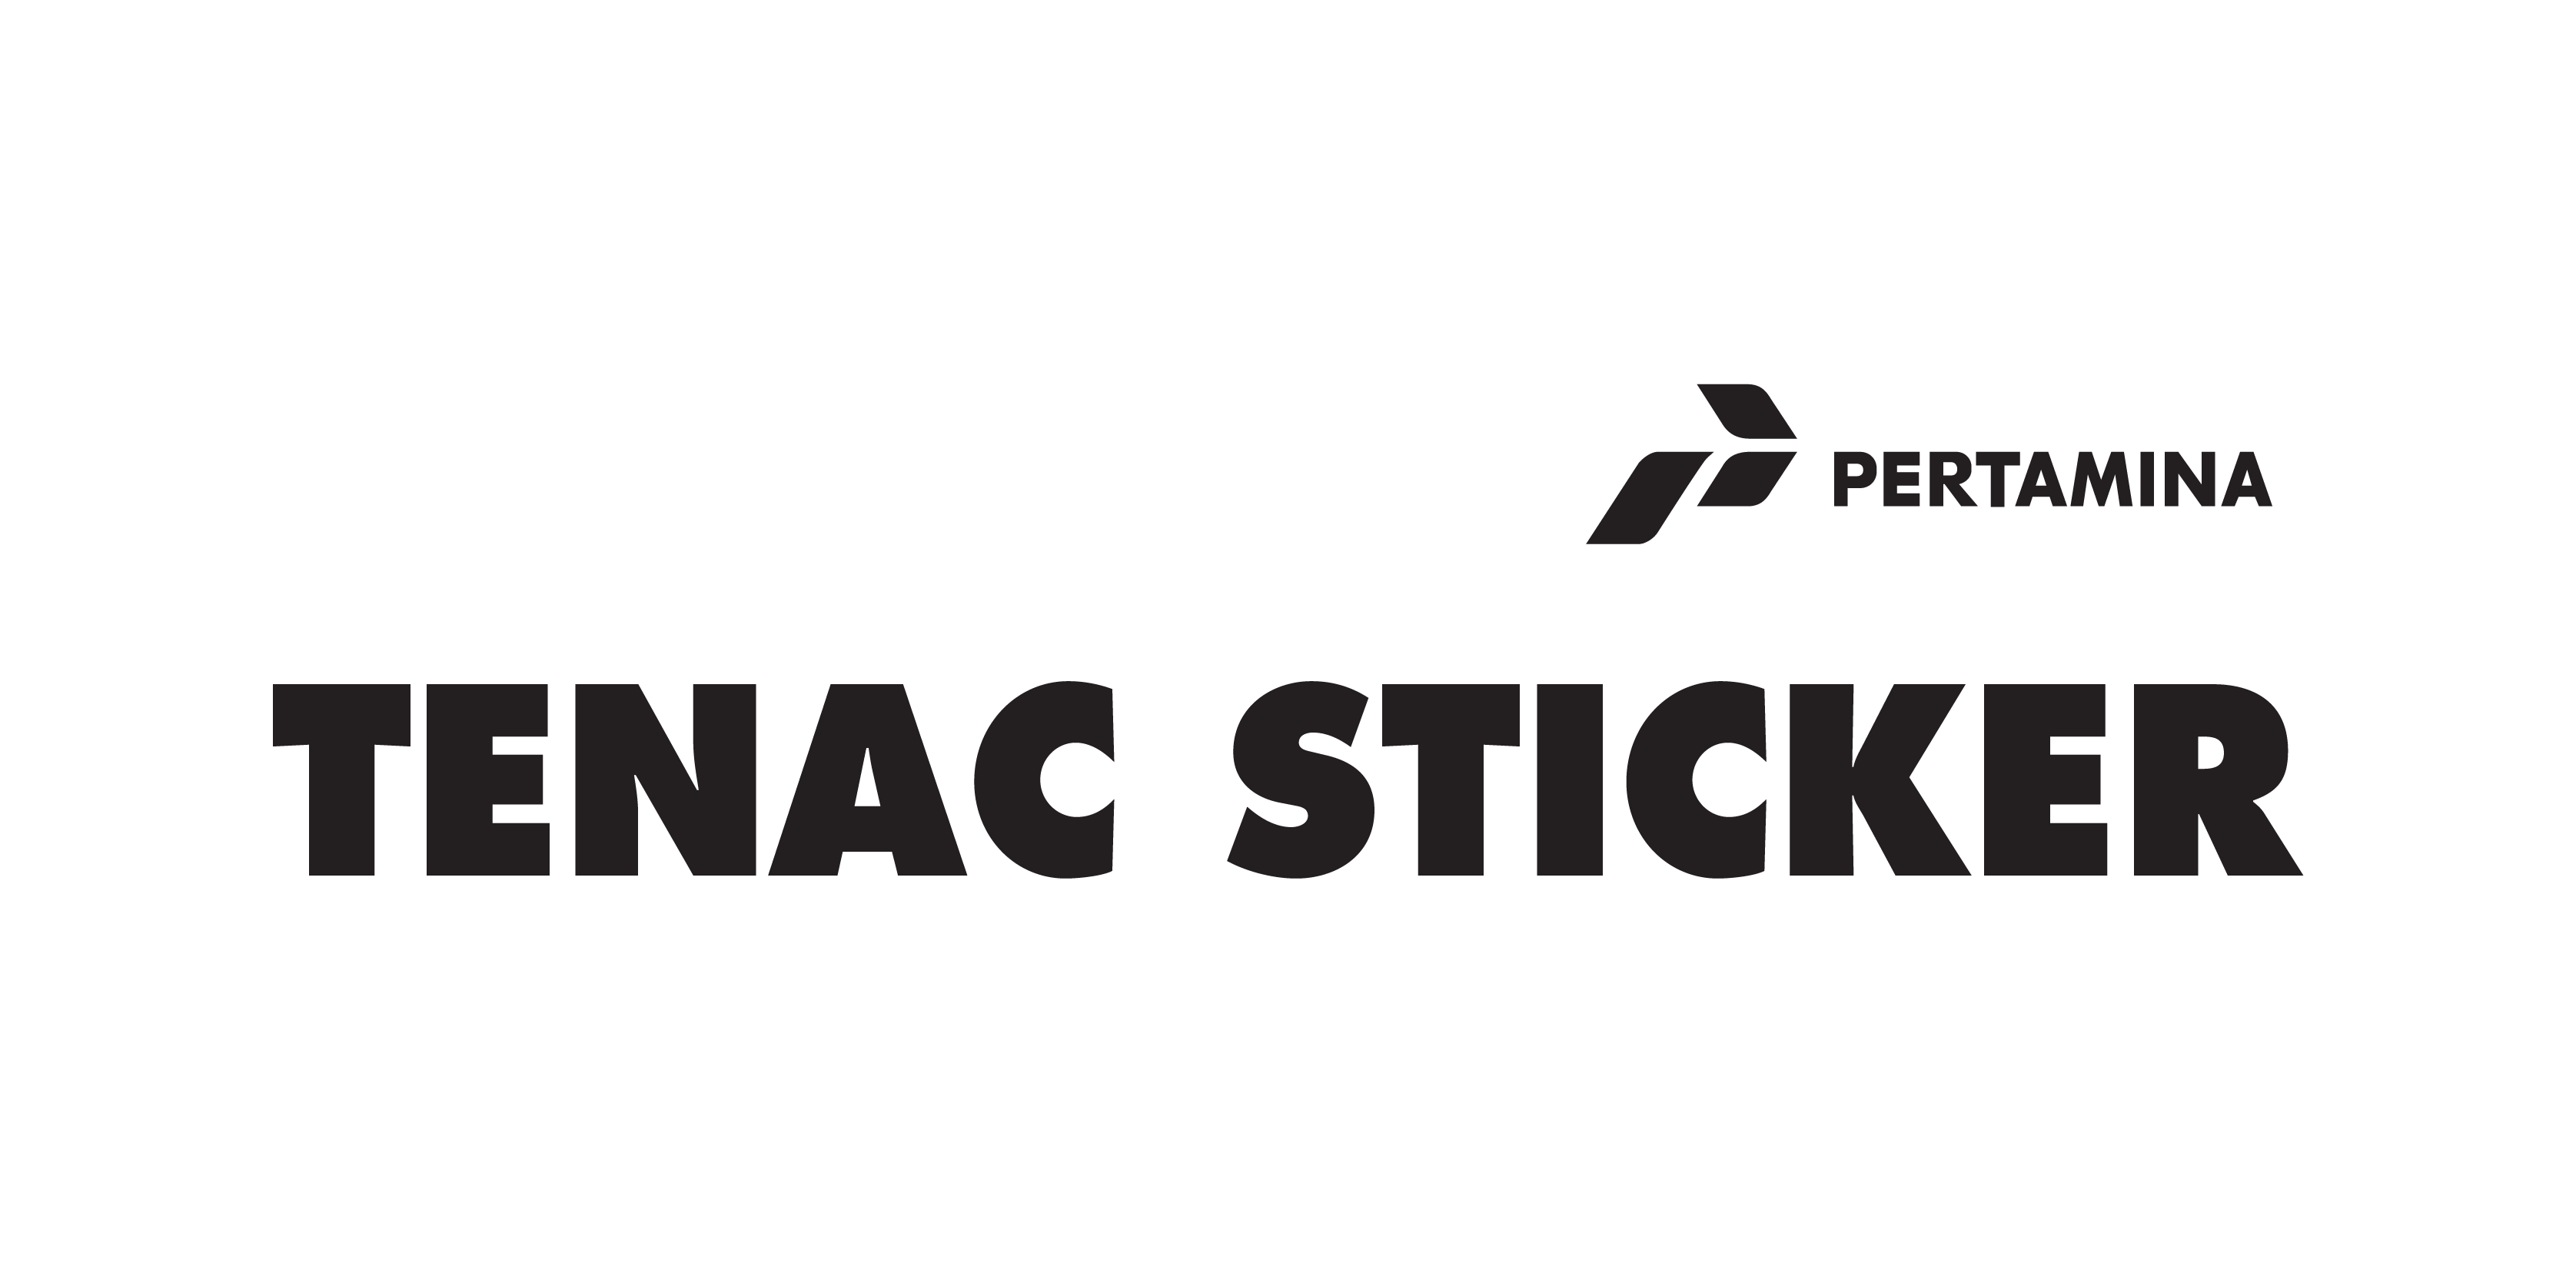 Tenac Sticker